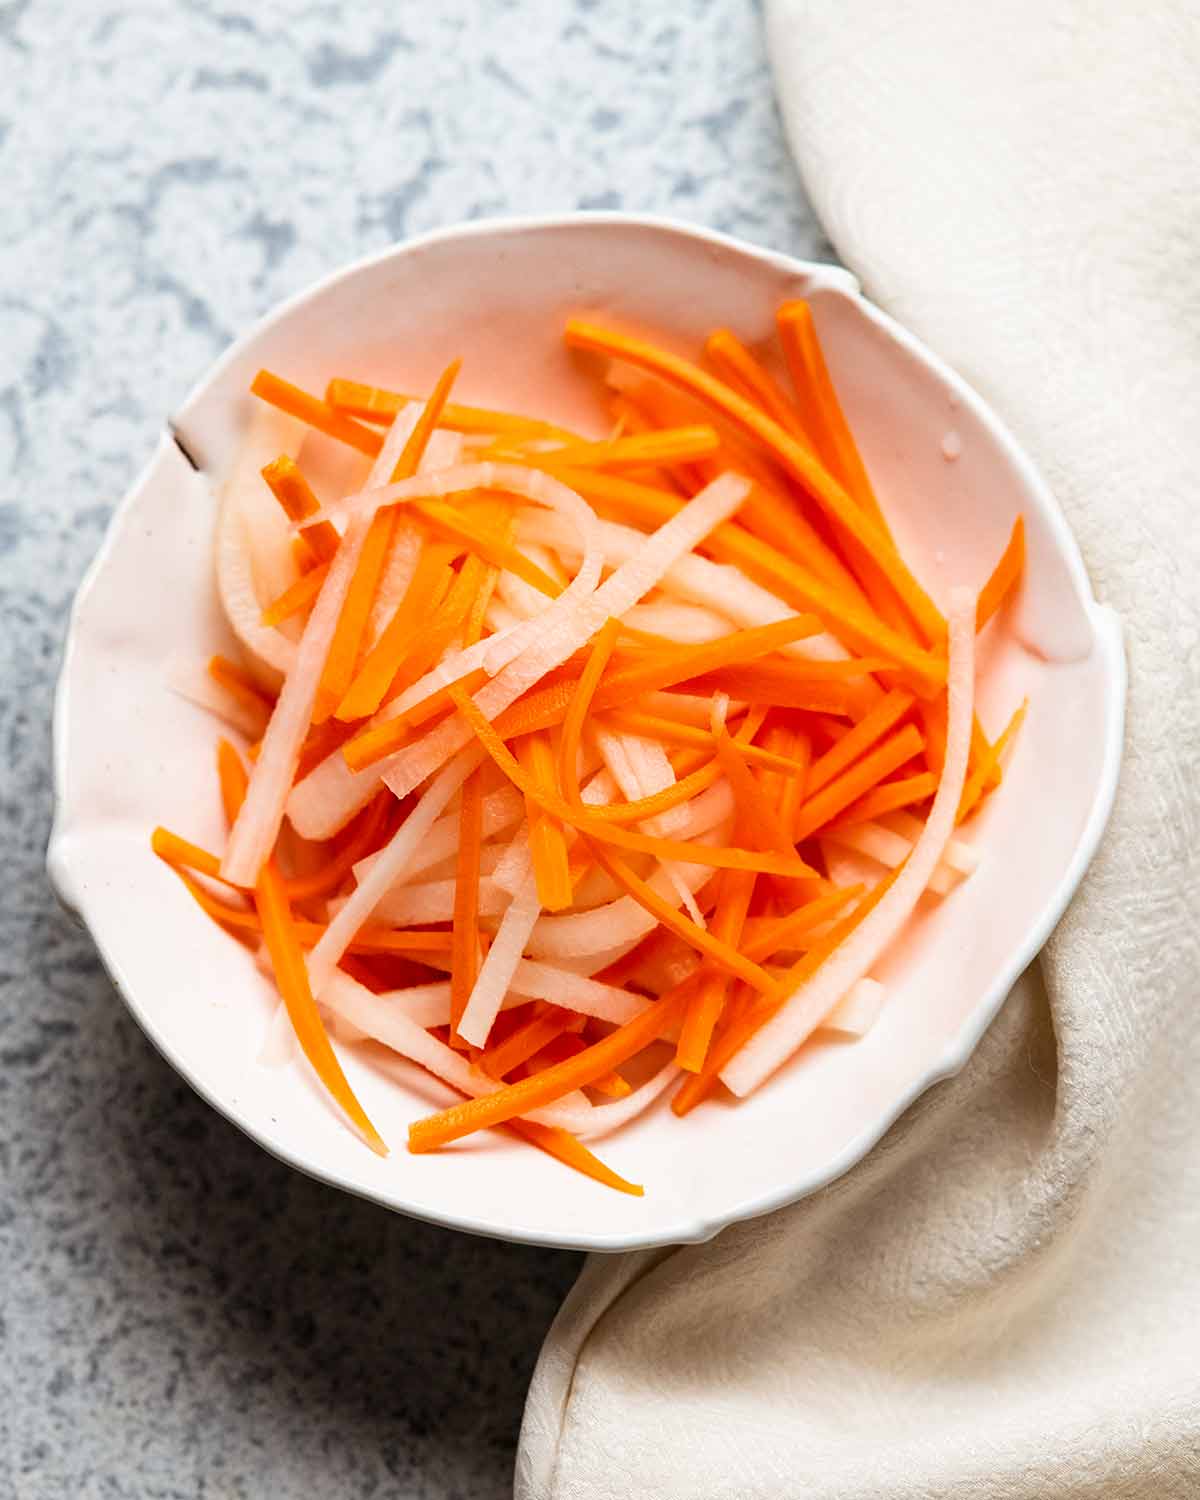 Vietnamese pickled carrots and daikon (radish)